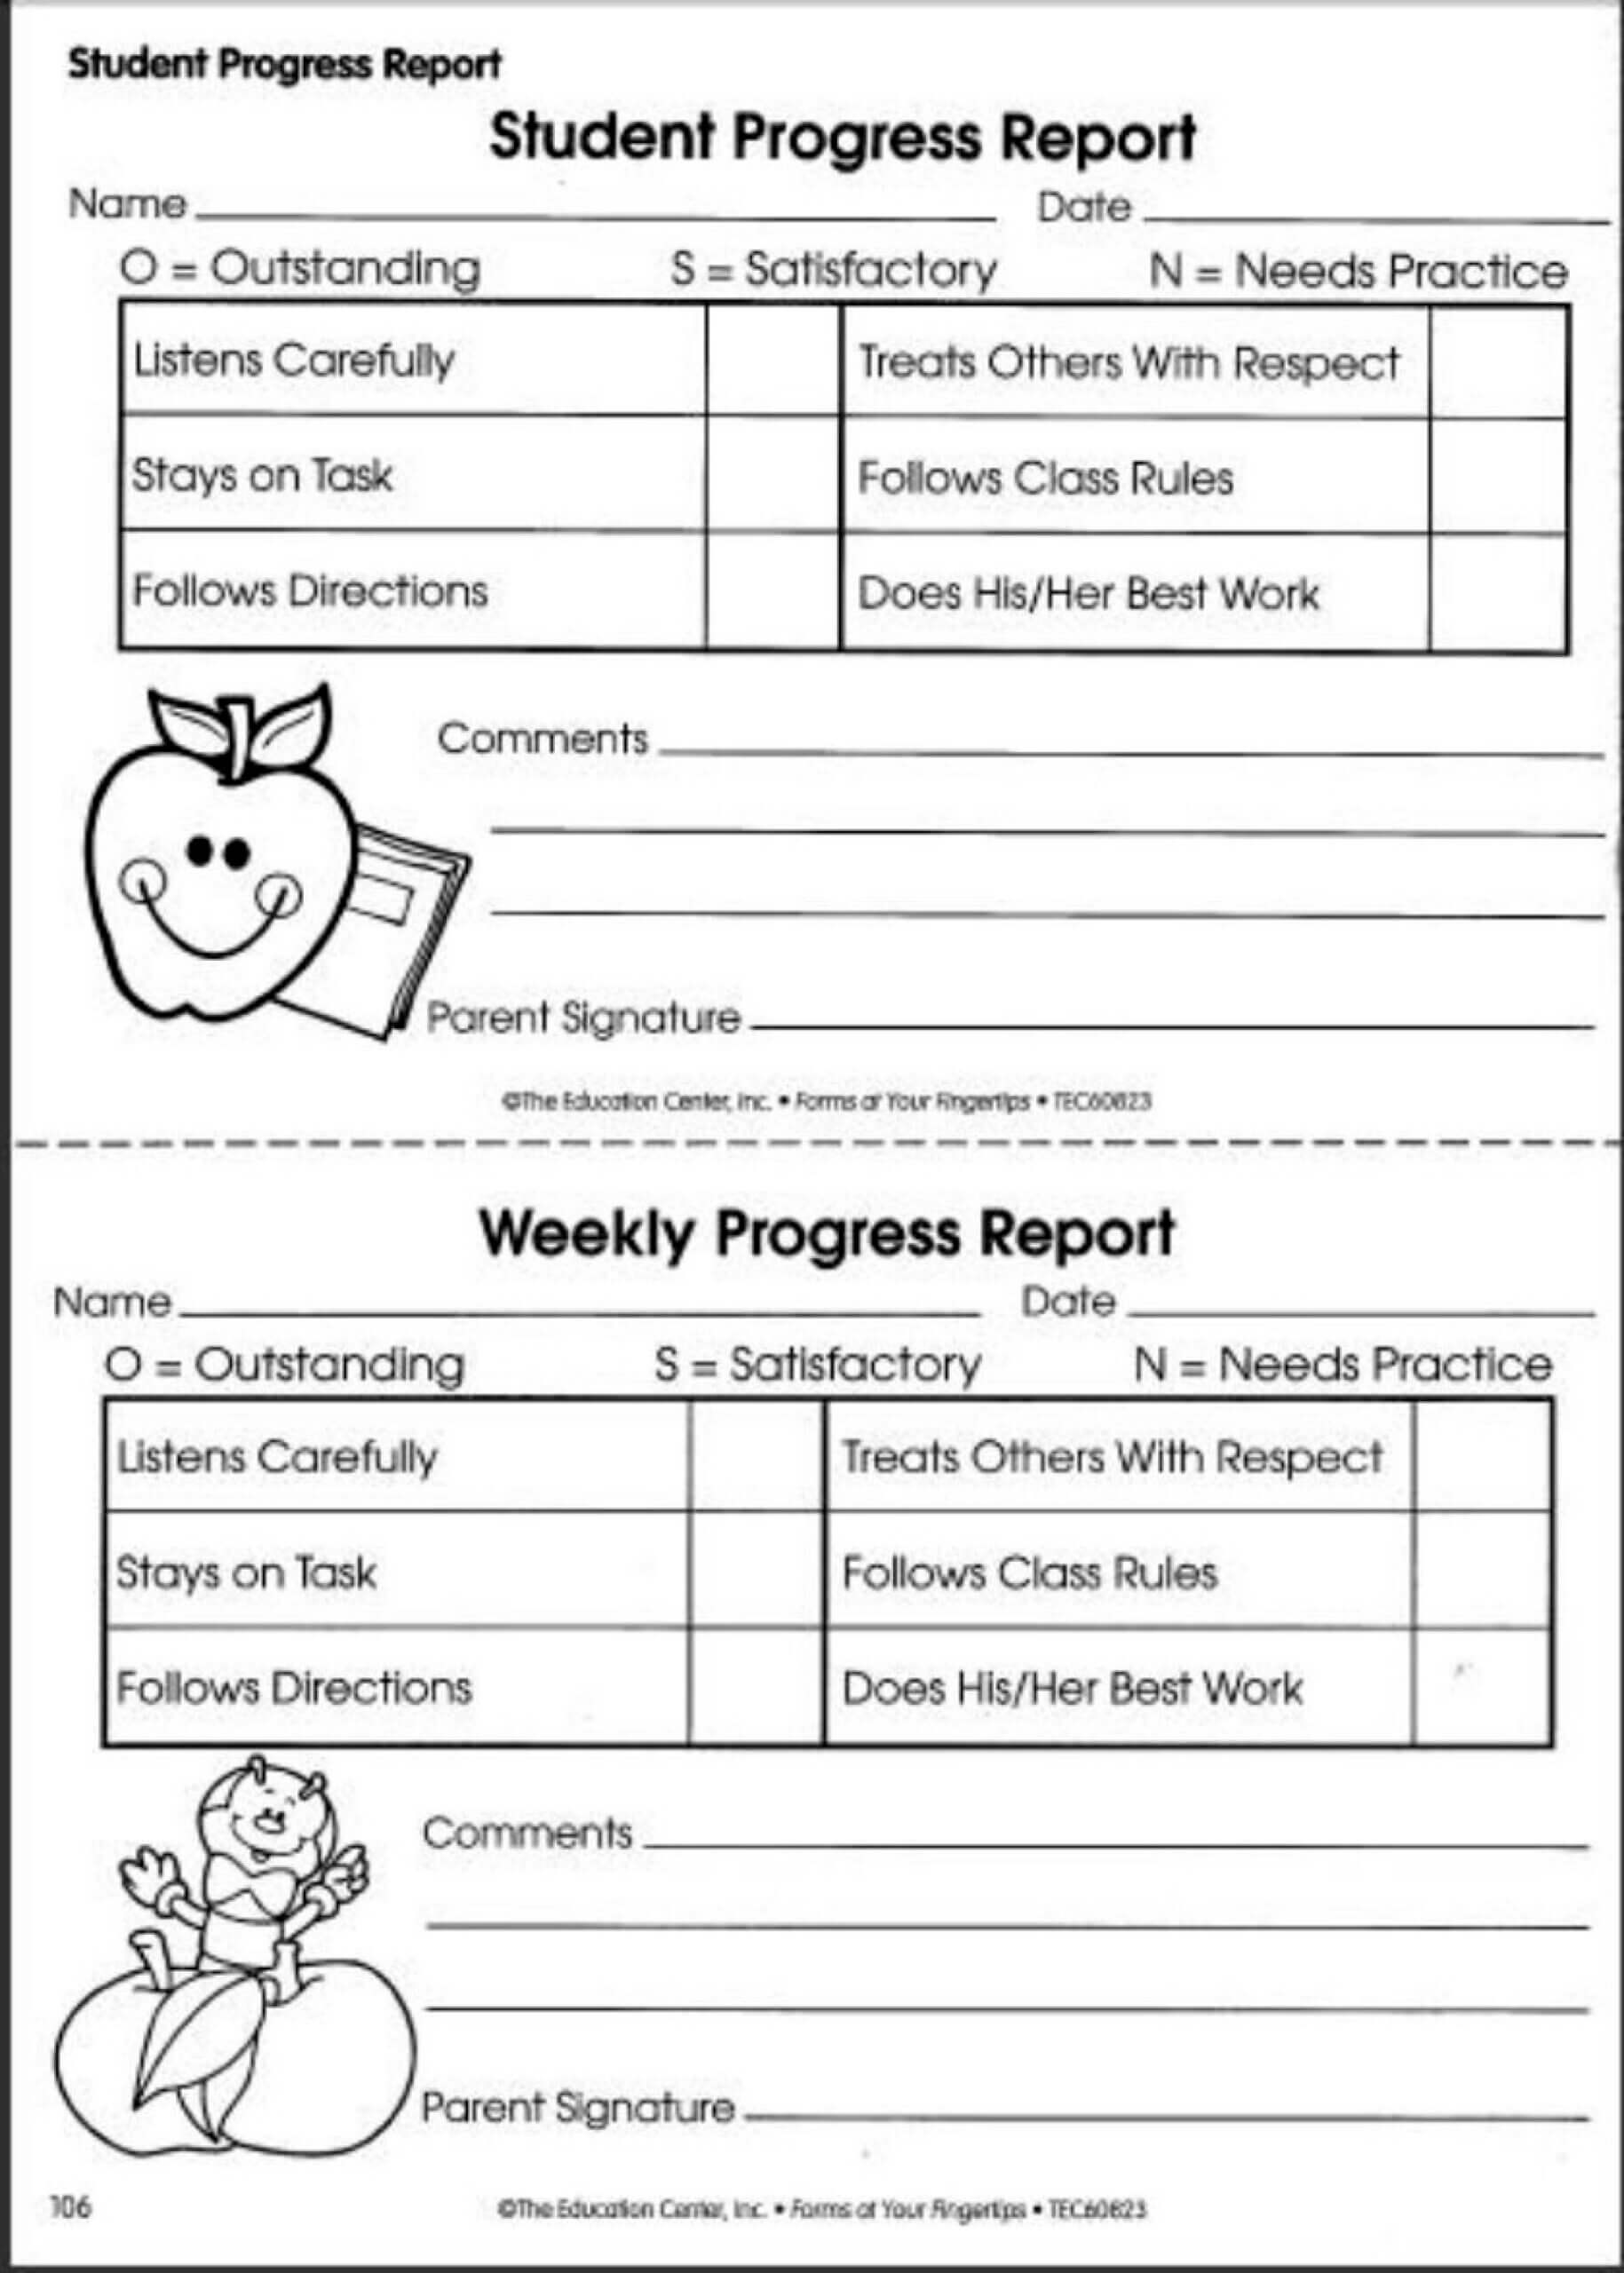 008 Student Progress Report Template Ideas Daily For With Educational Progress Report Template